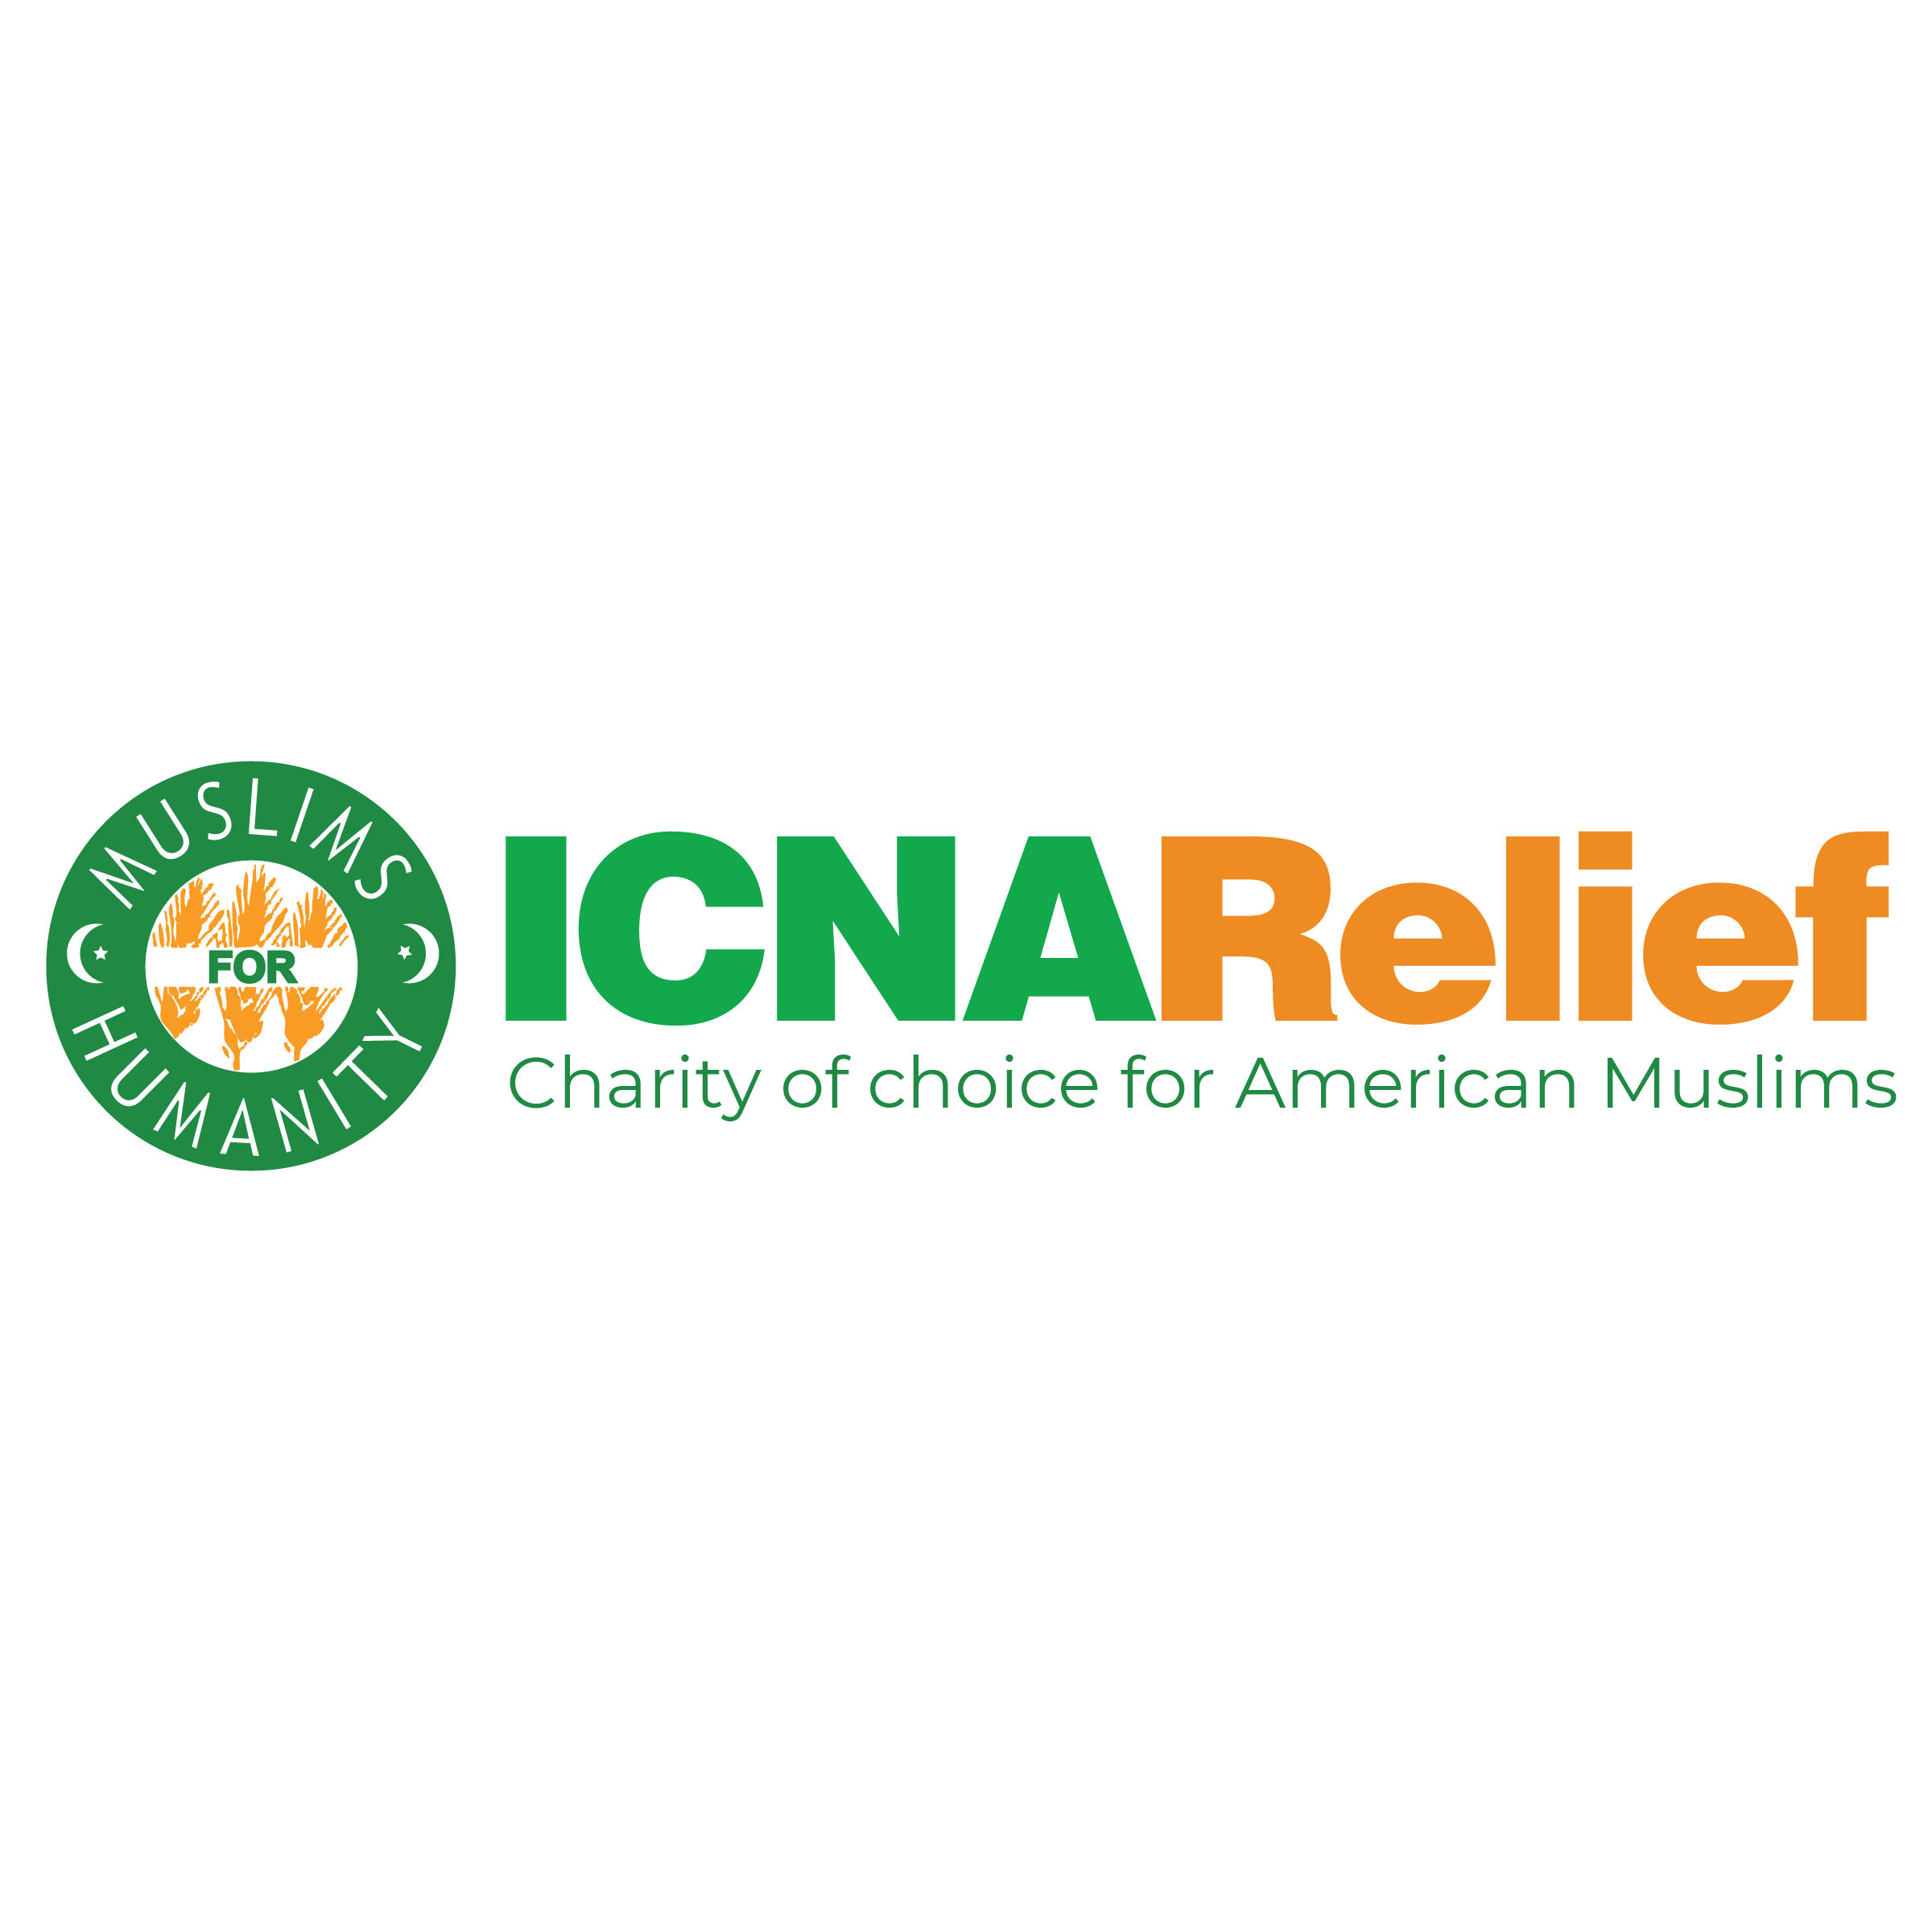 Branding Islamic Circle of North America (ICNA)